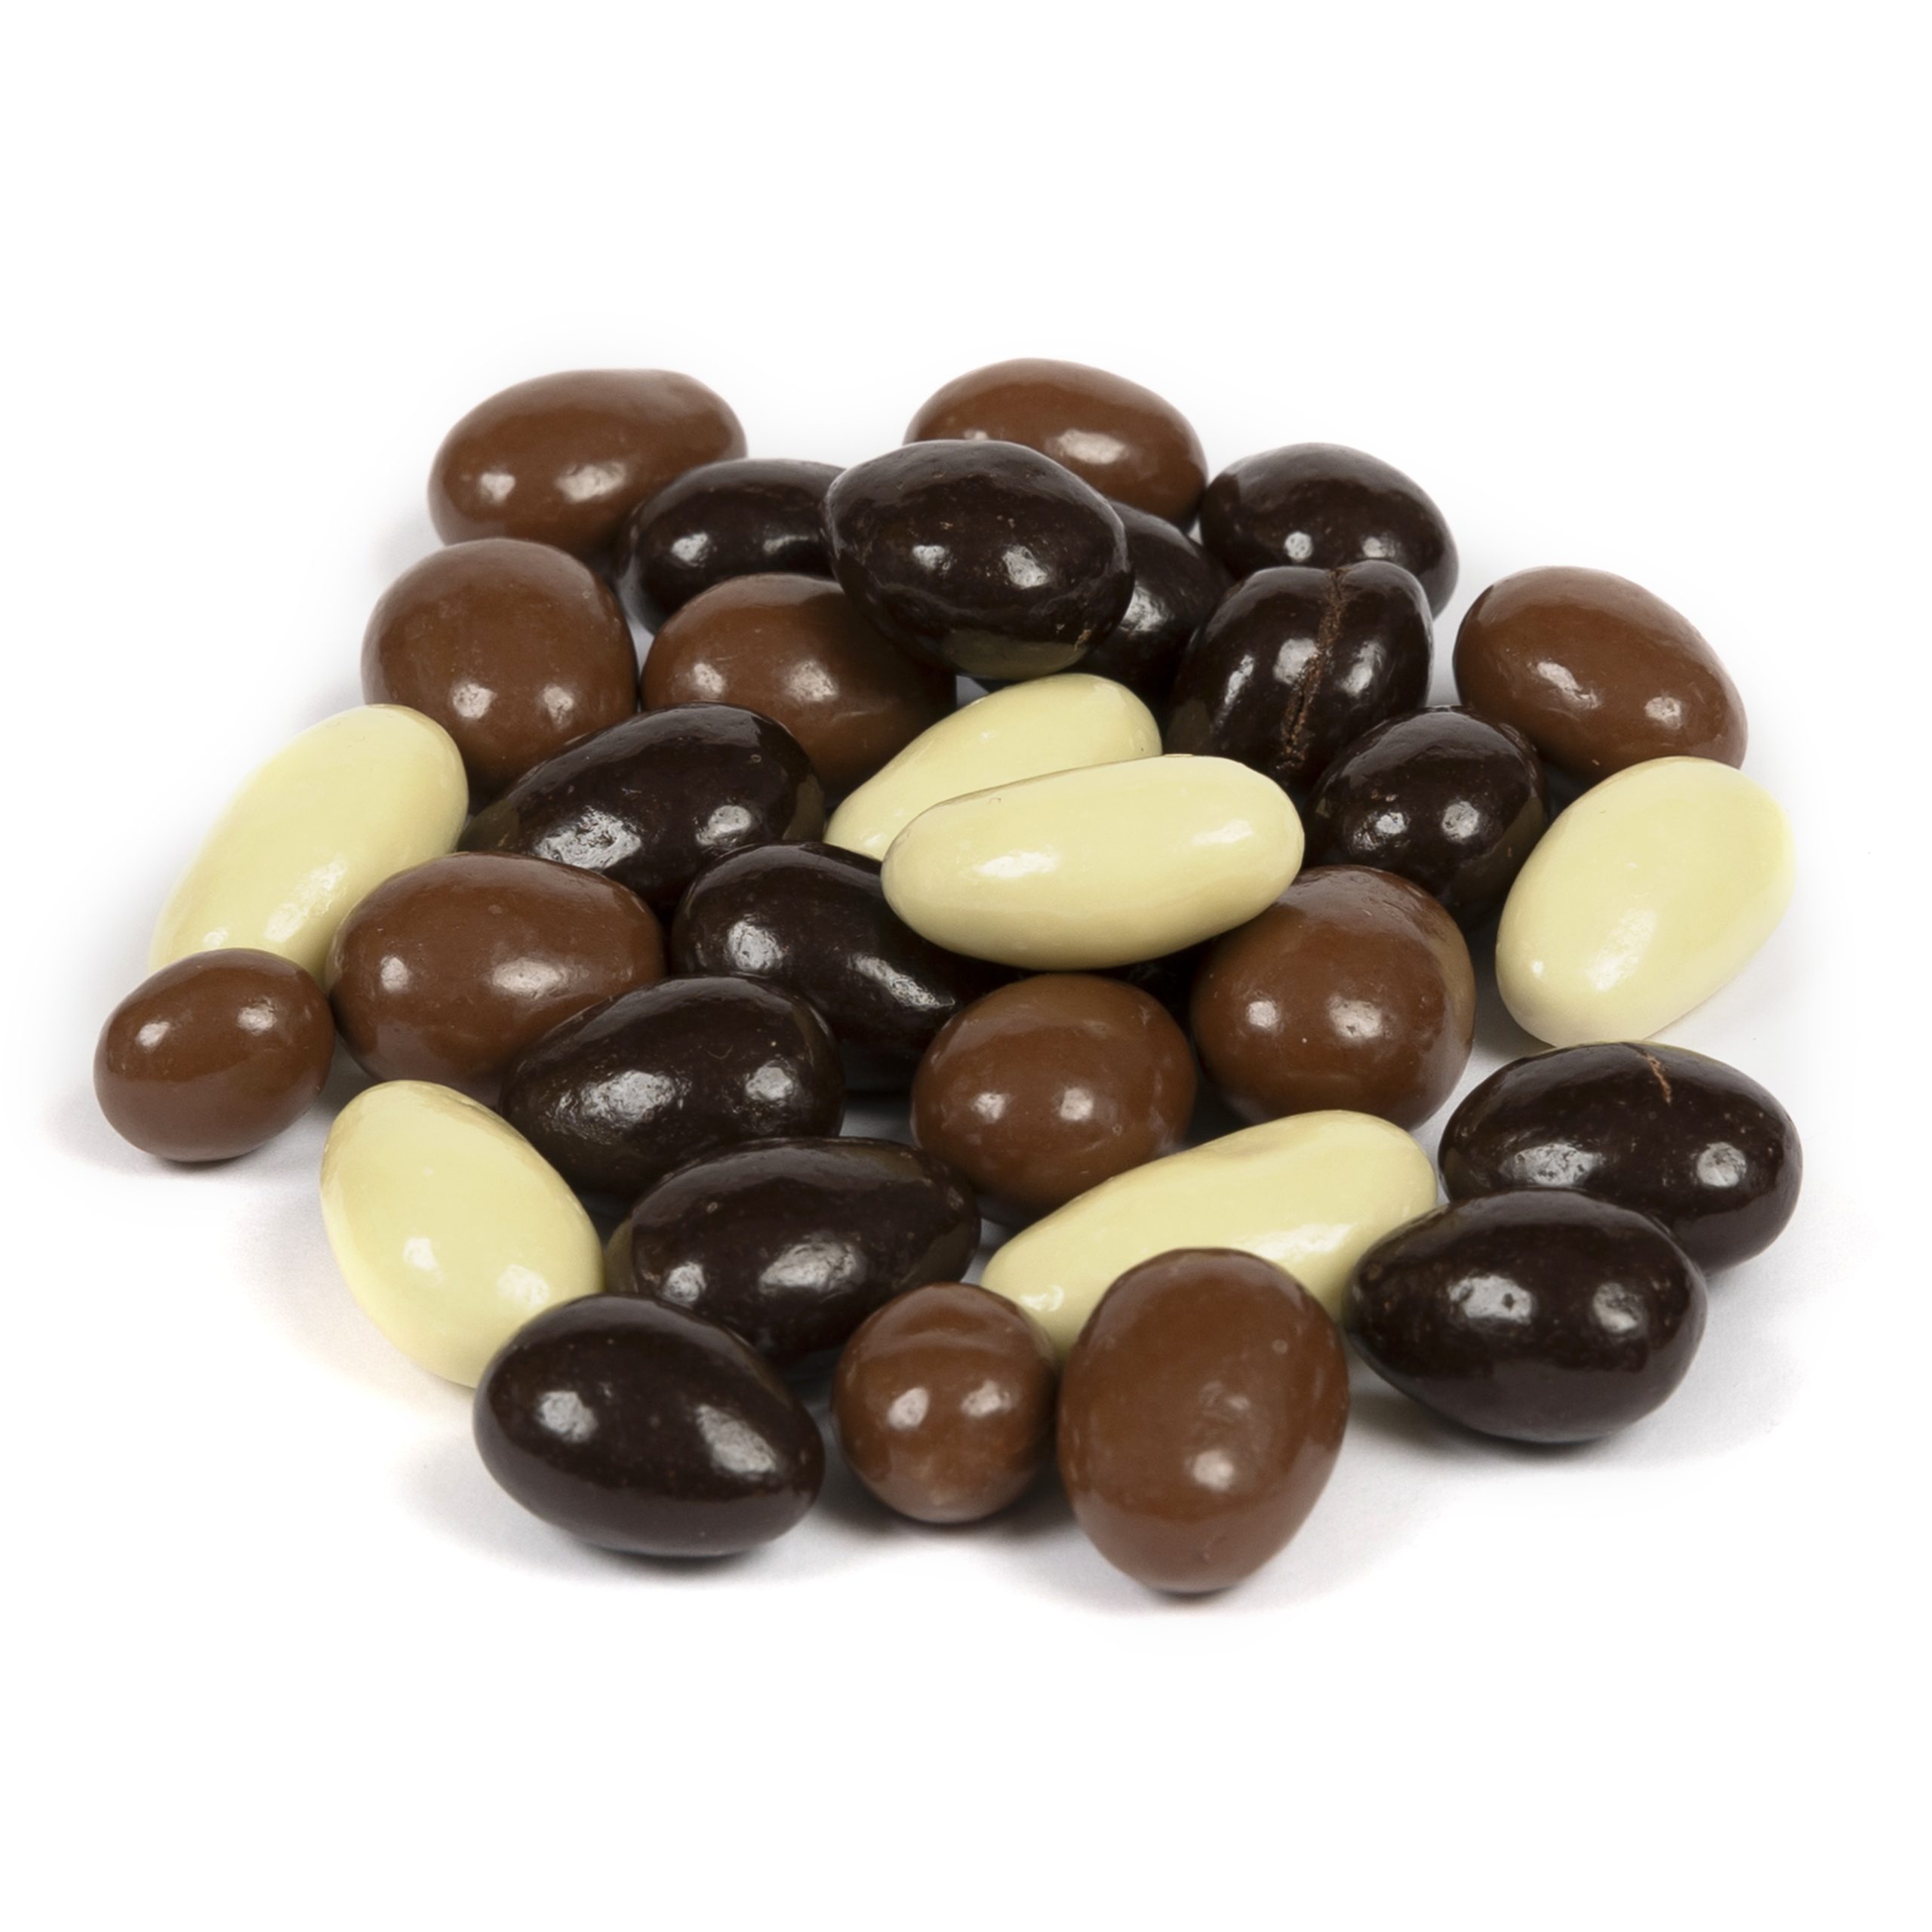 Dorri - Assorted Chocolate Almonds